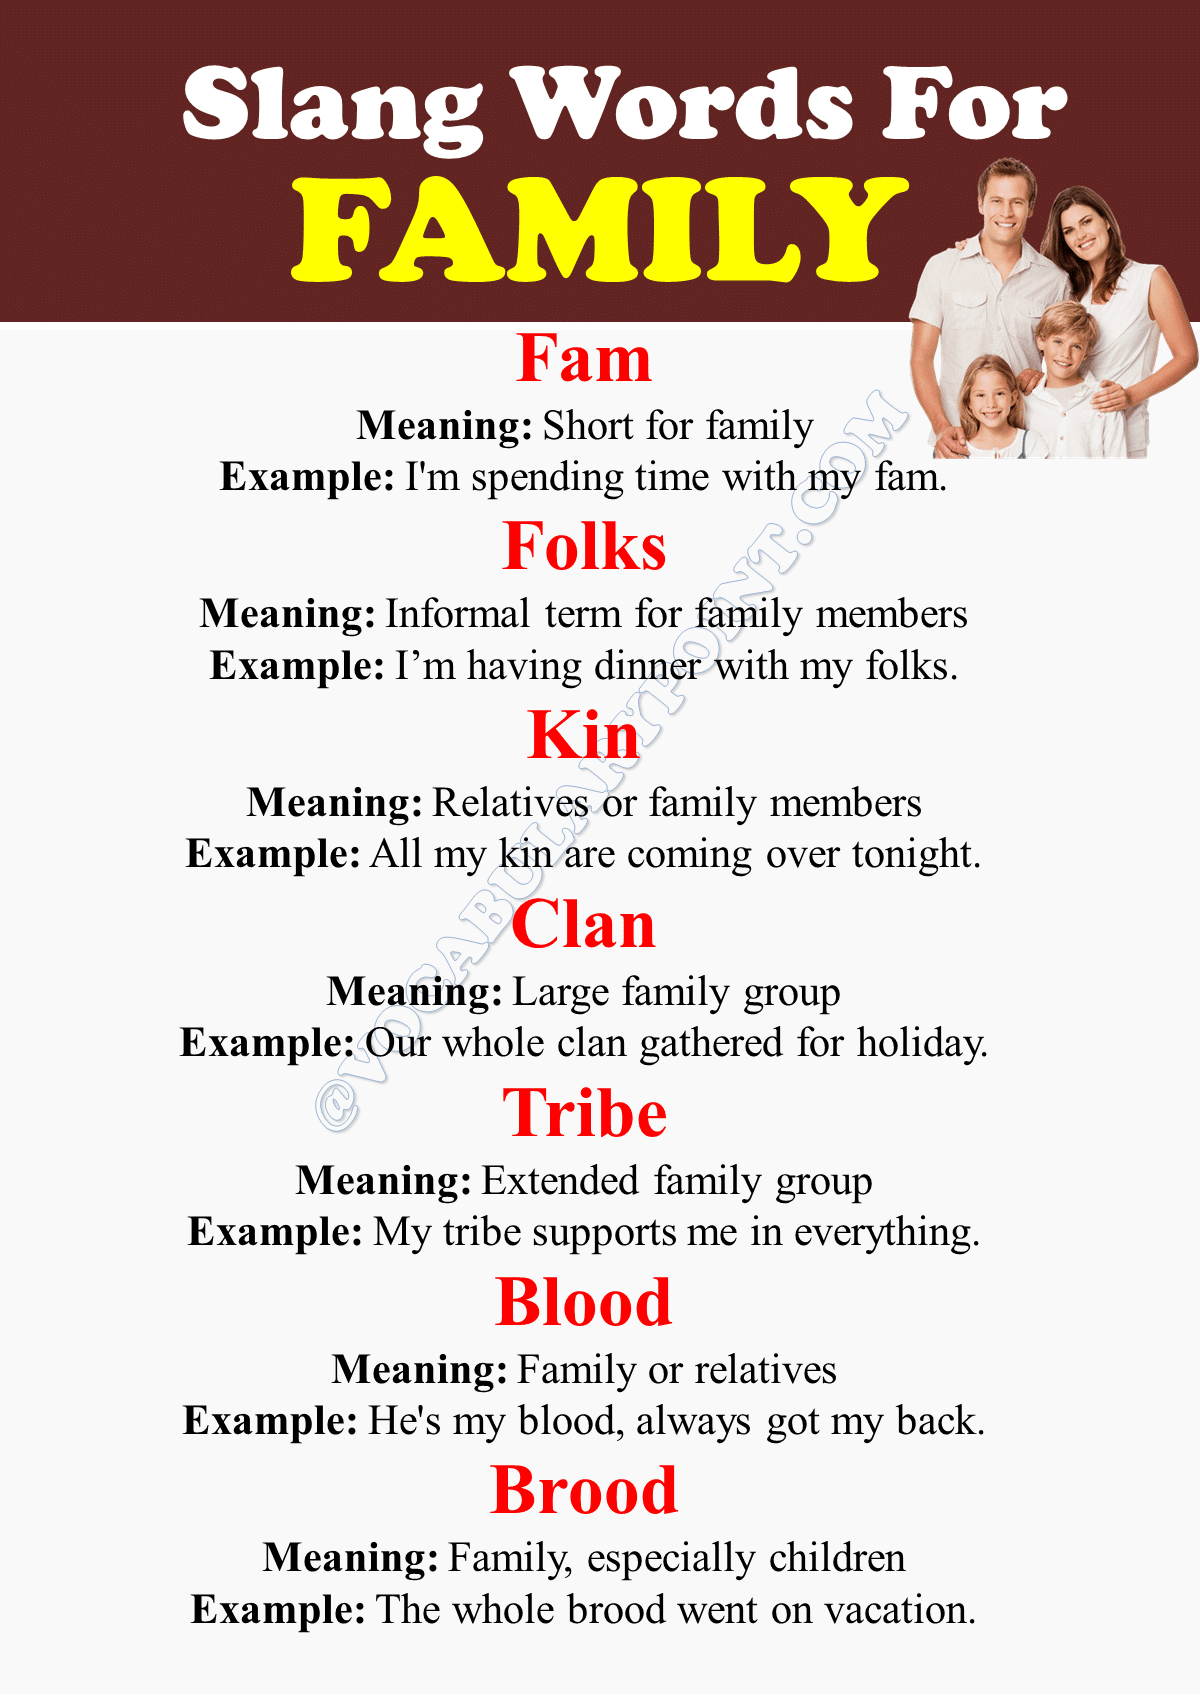 Slang Words For Family